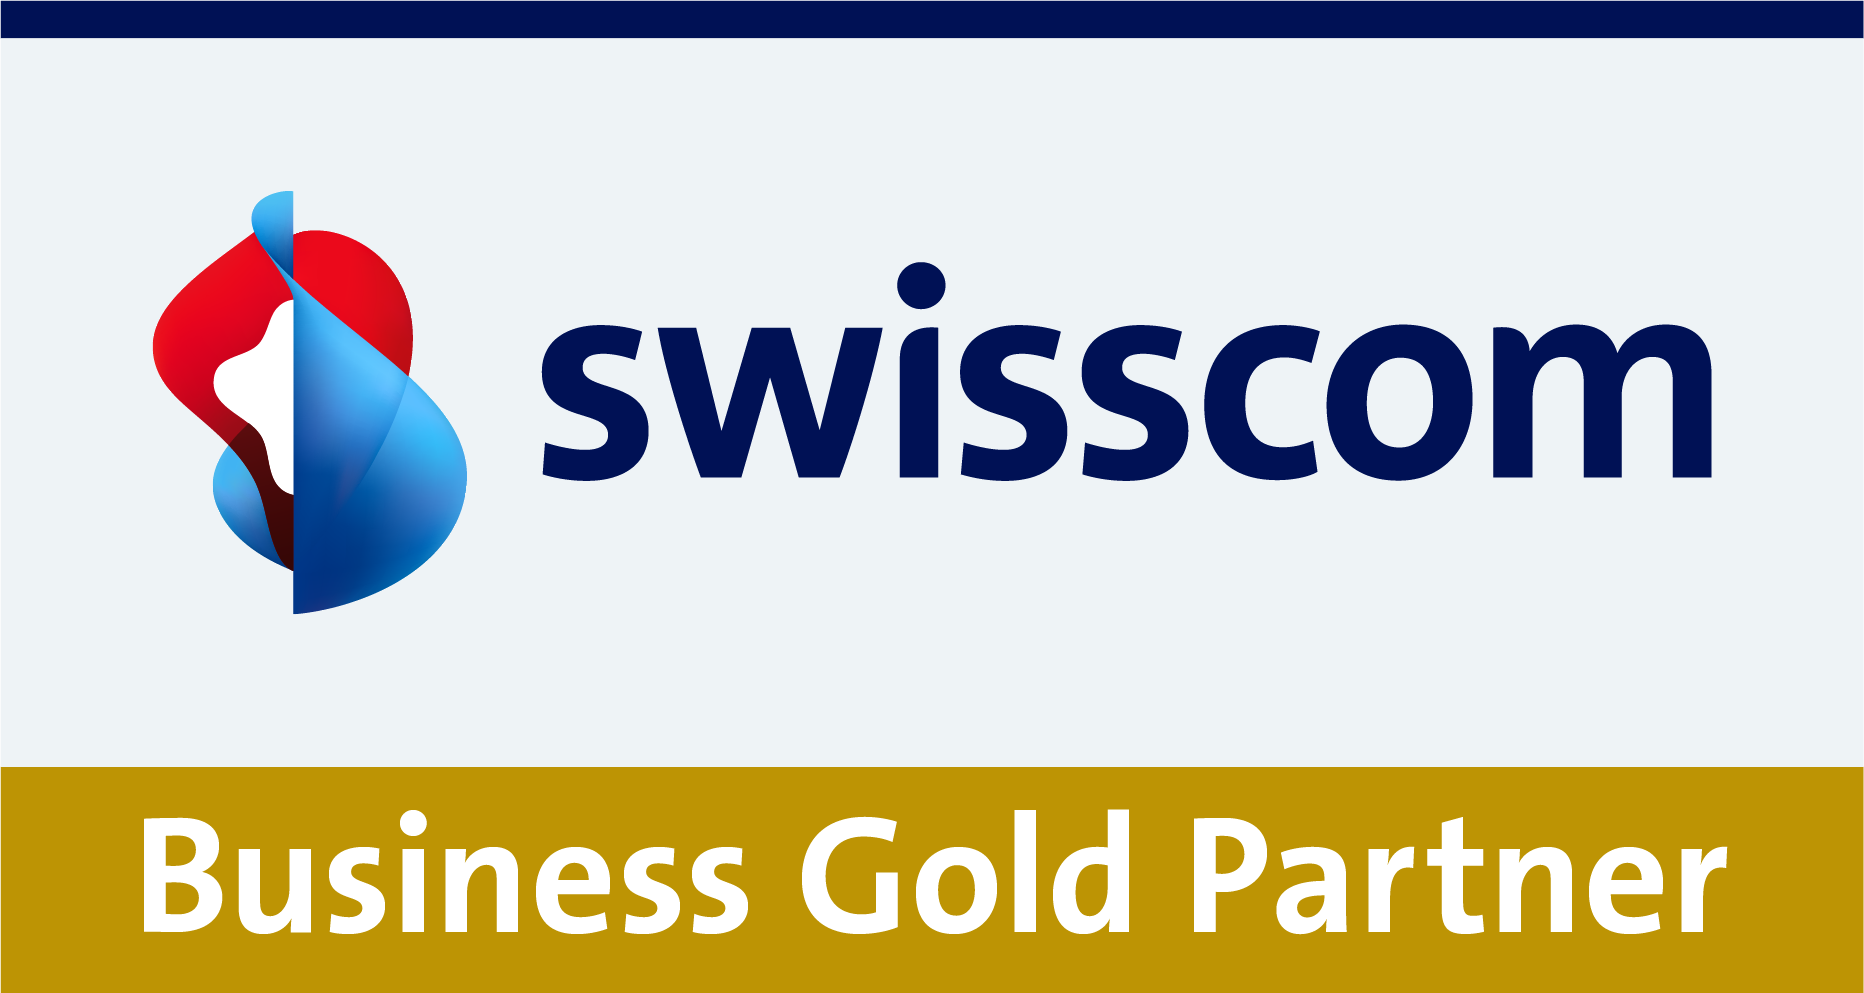 swisscom_business-partner-goldrgb.png